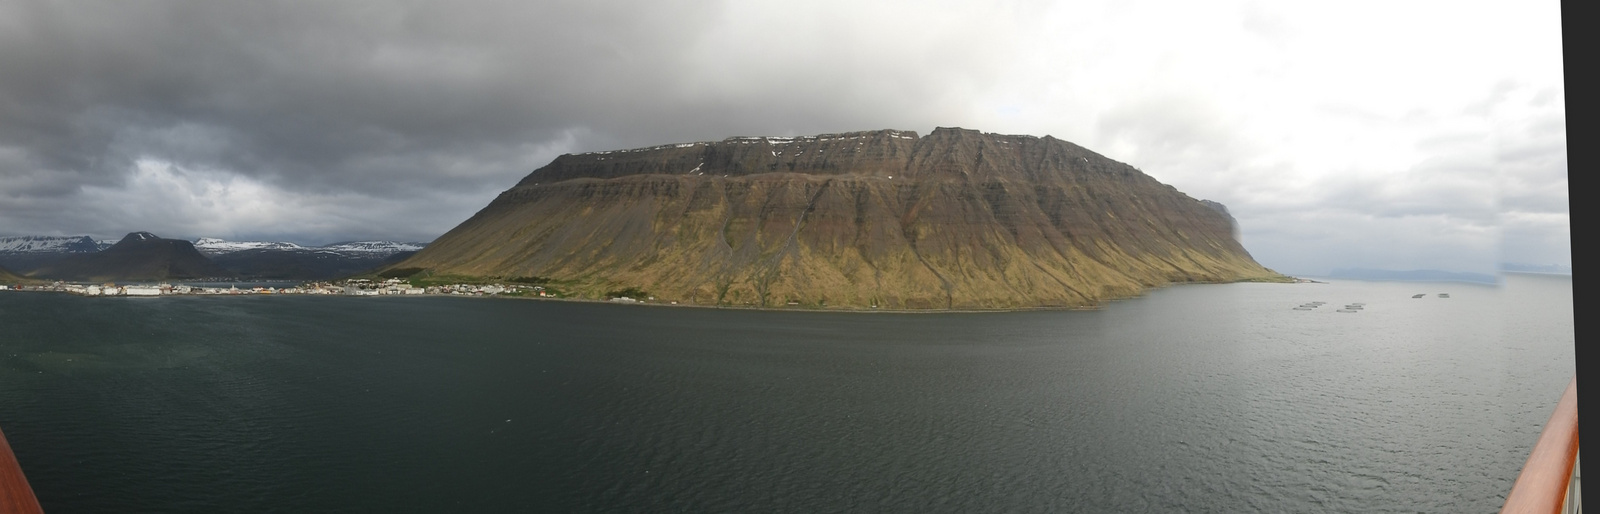 Izland, a kopár vidék